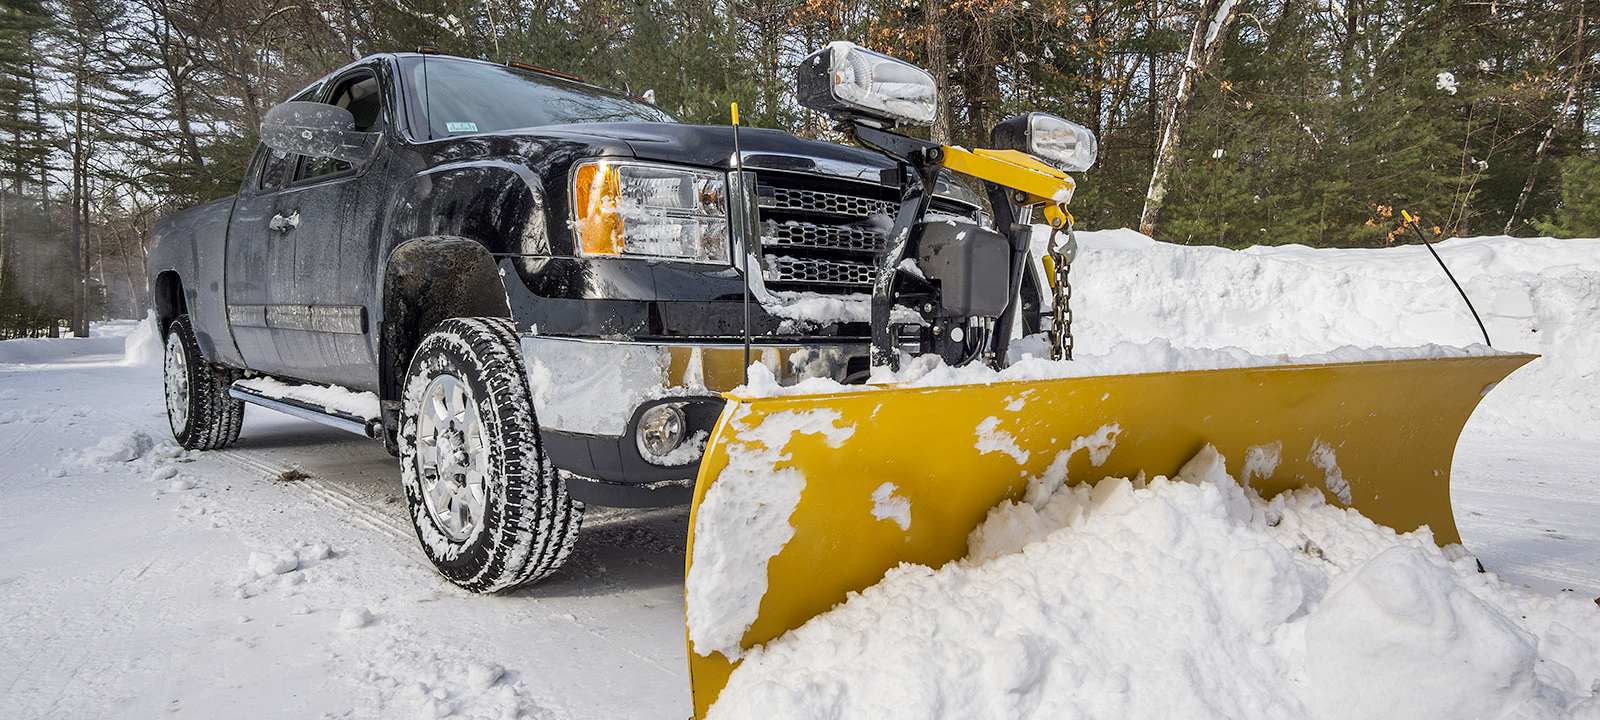 snow removal service header image